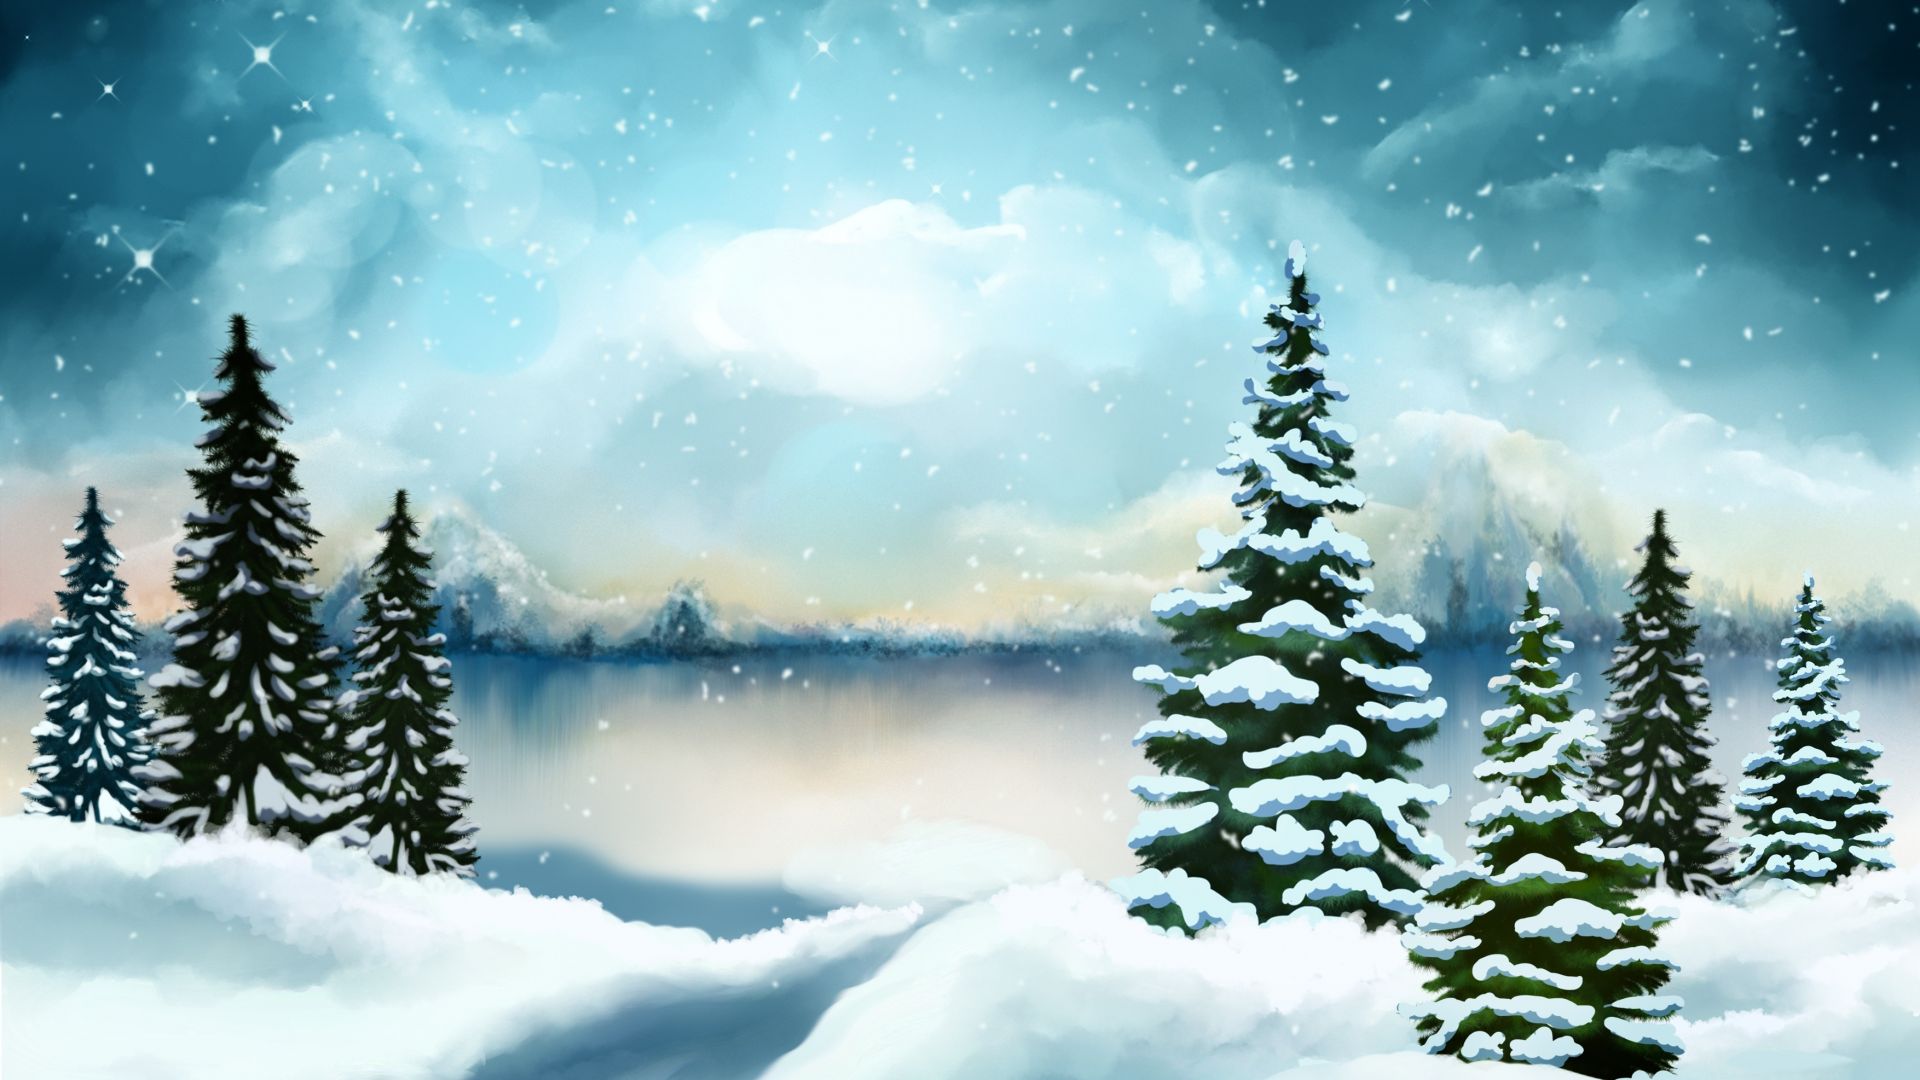 Winter Pine Trees Lake Digital Art Wallpaper HD Image Picture